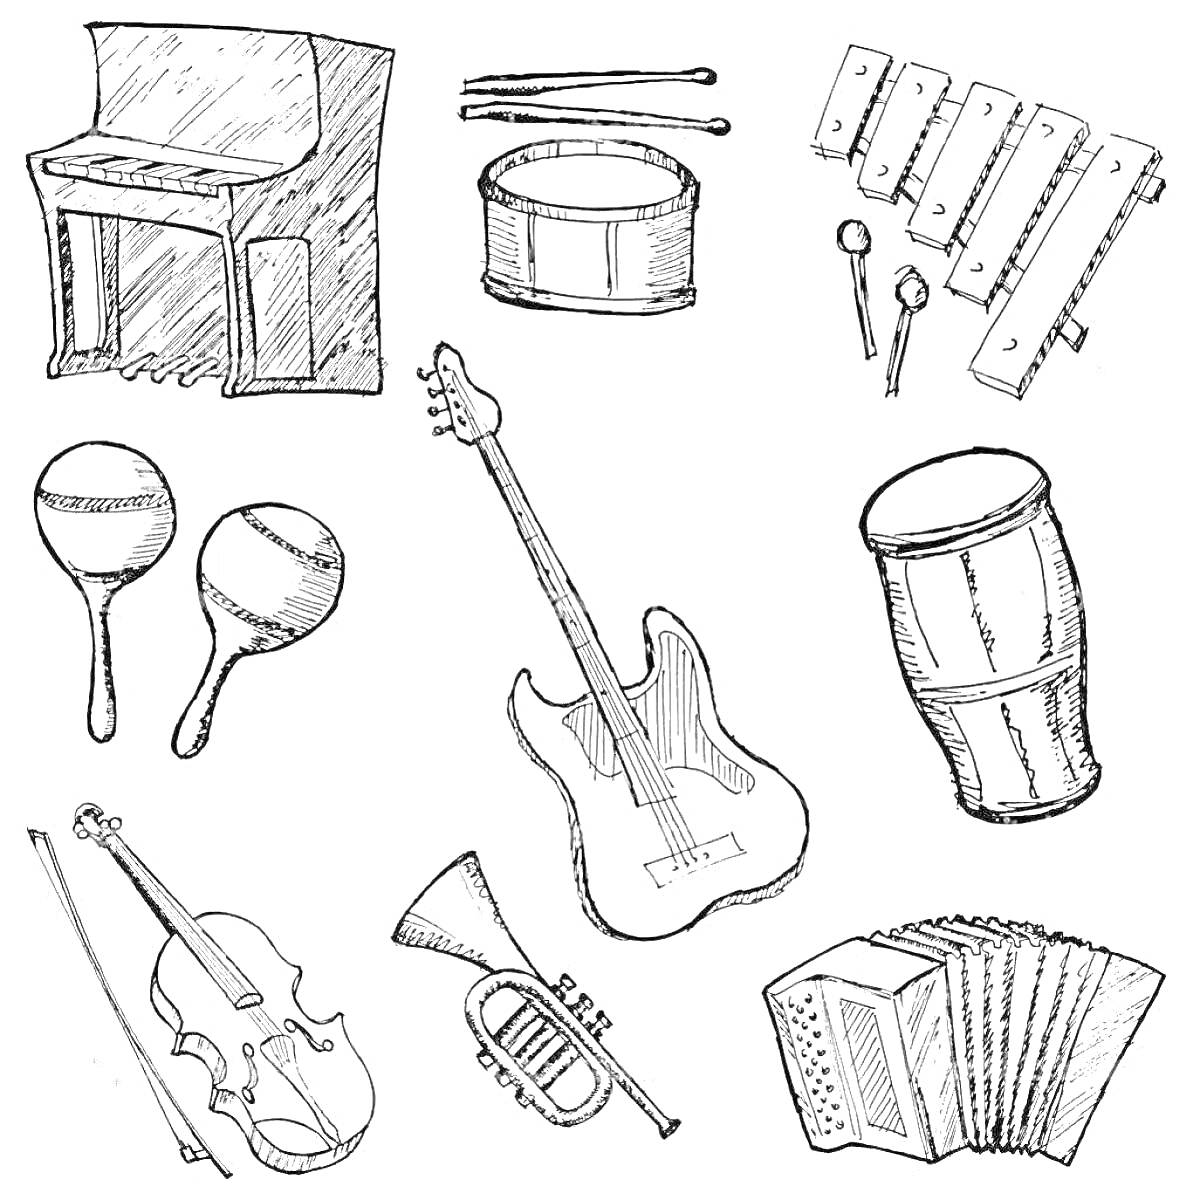 Набор музыкальных инструментов – пианино, барабаны, ксилофон, маракасы, электрогитара, бубен, тромбон, скрипка, аккордеон